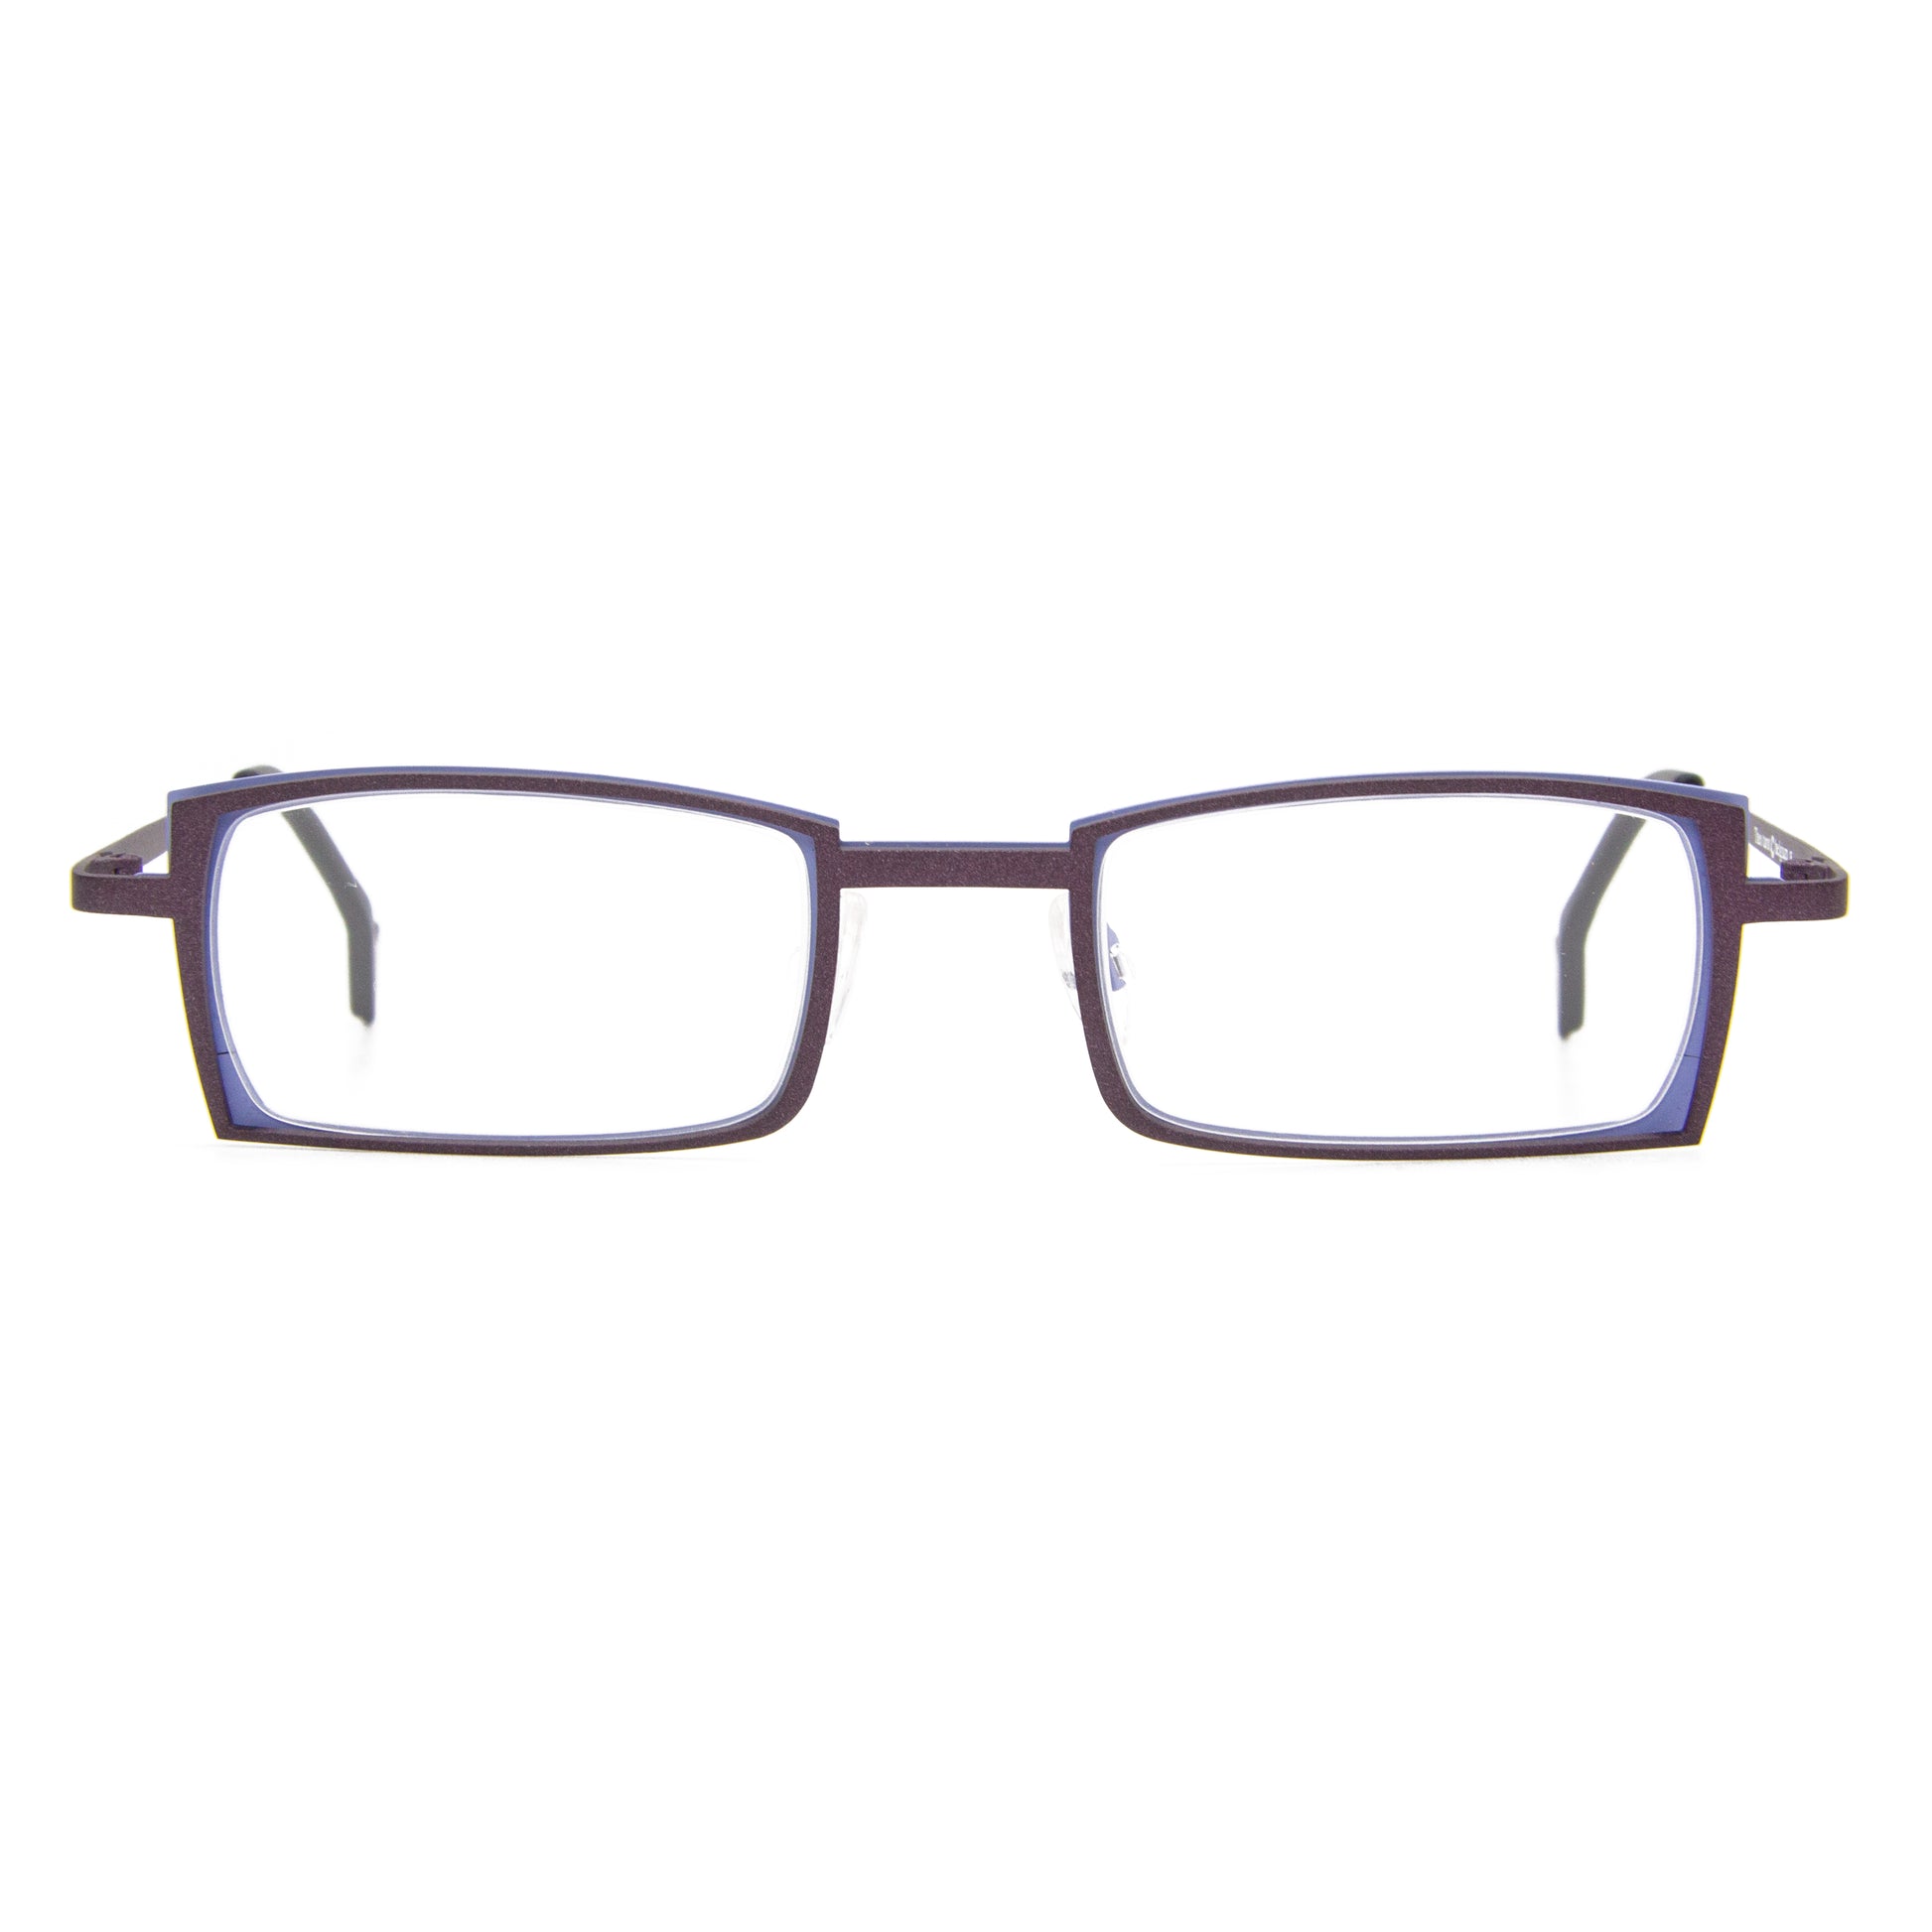 Theo - Eyewear - Tarot - 244 - Glasses